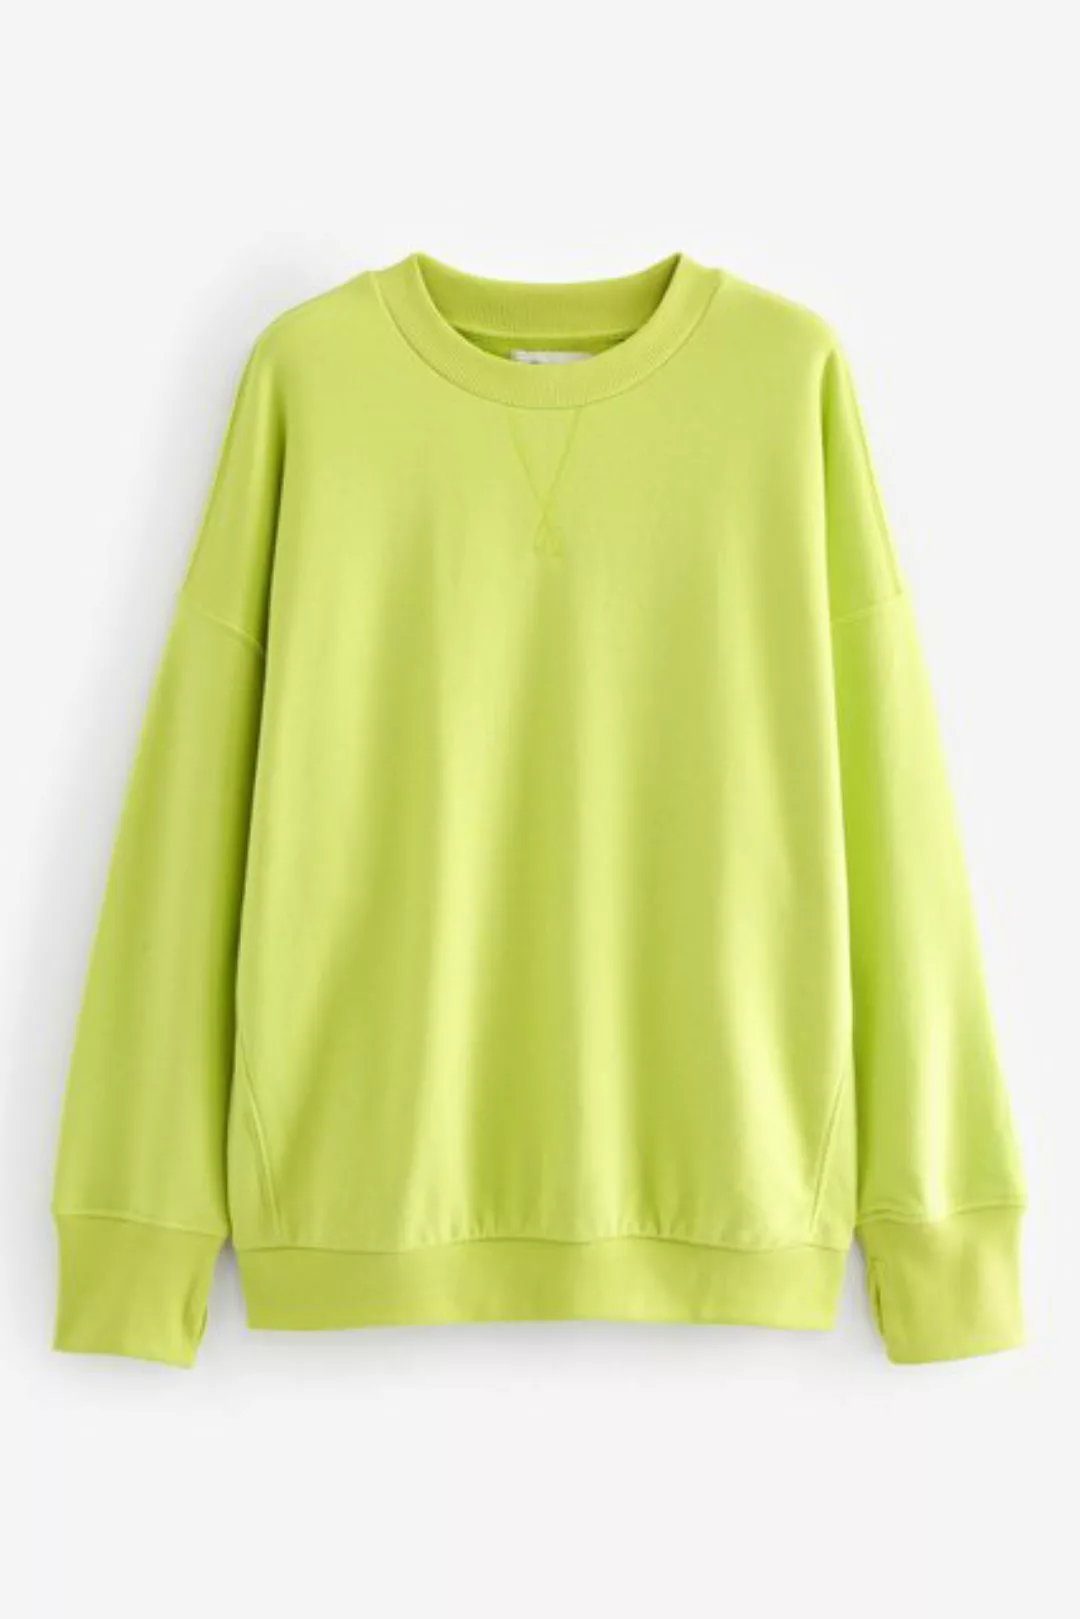 Next Longsweatshirt Oversized Fit längeres Active Rundhals-Sweatshirt (1-tl günstig online kaufen